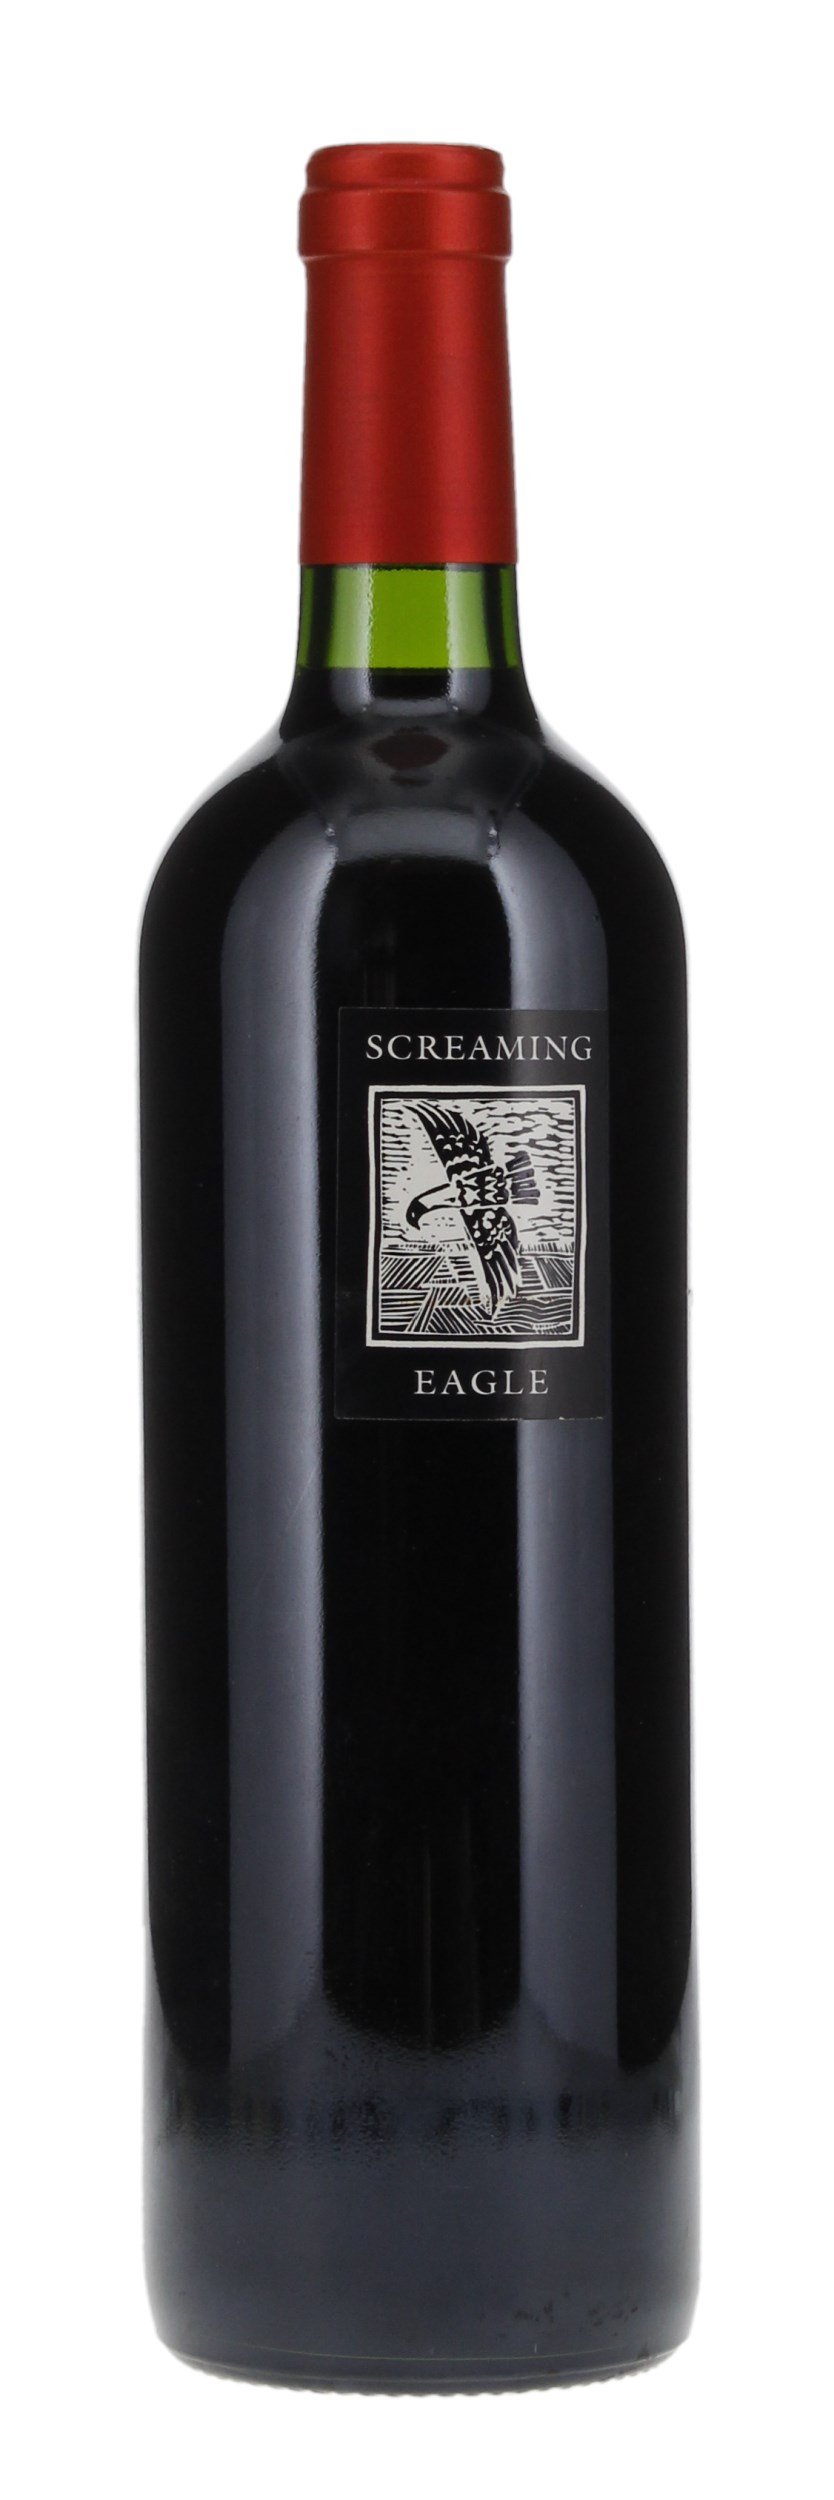 2006 Screaming Eagle Cabernet Sauvignon, 750ml